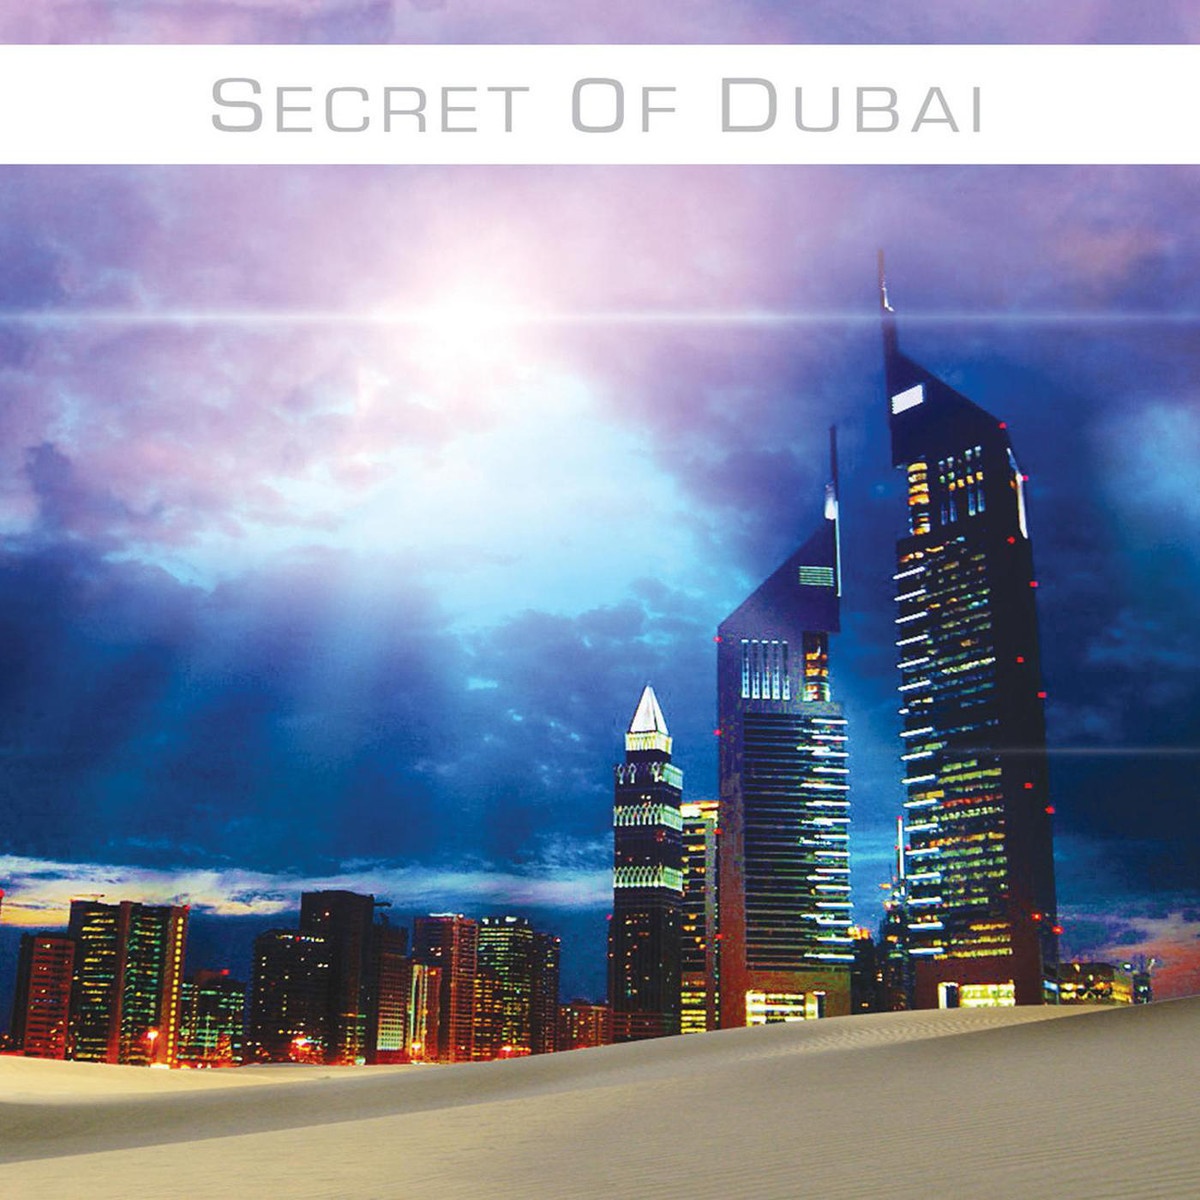 The Secret of Dubai